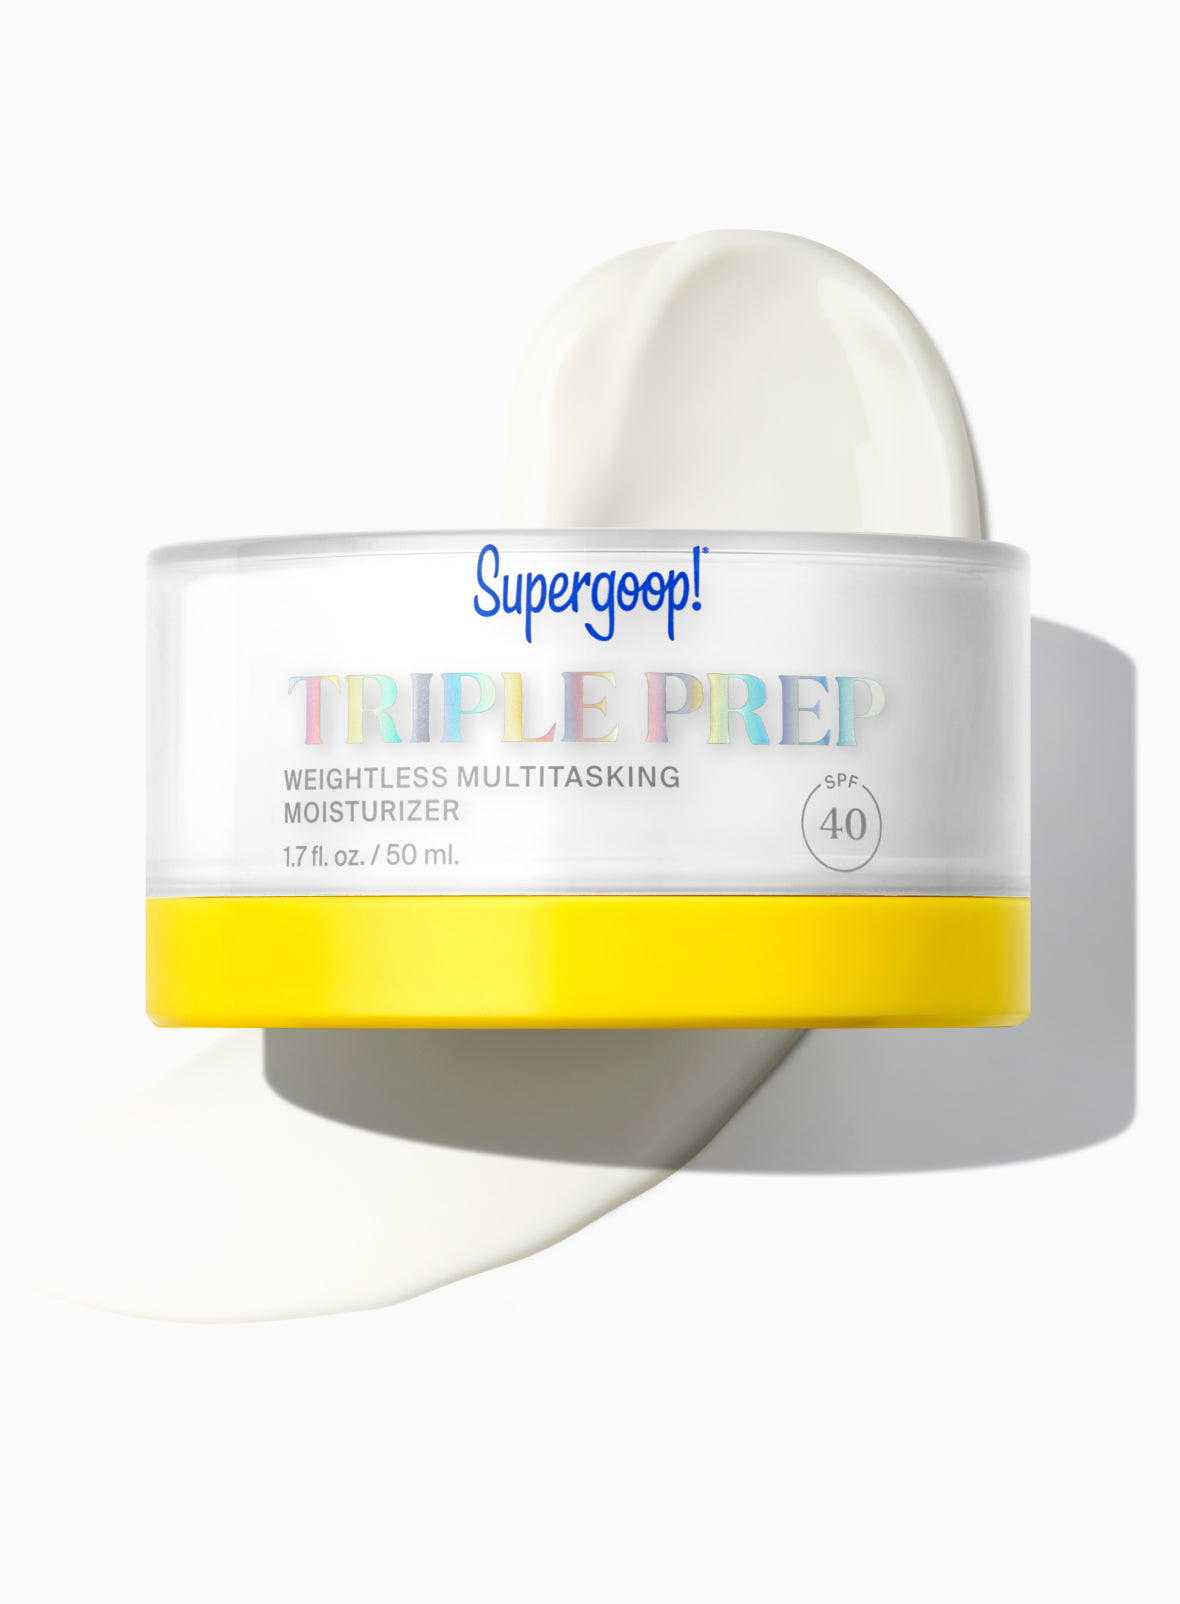 Triple Prep Weightless Multitasking Moisturizer SPF 40 Sunscreen 1.7 fl. oz. | Supergoop!